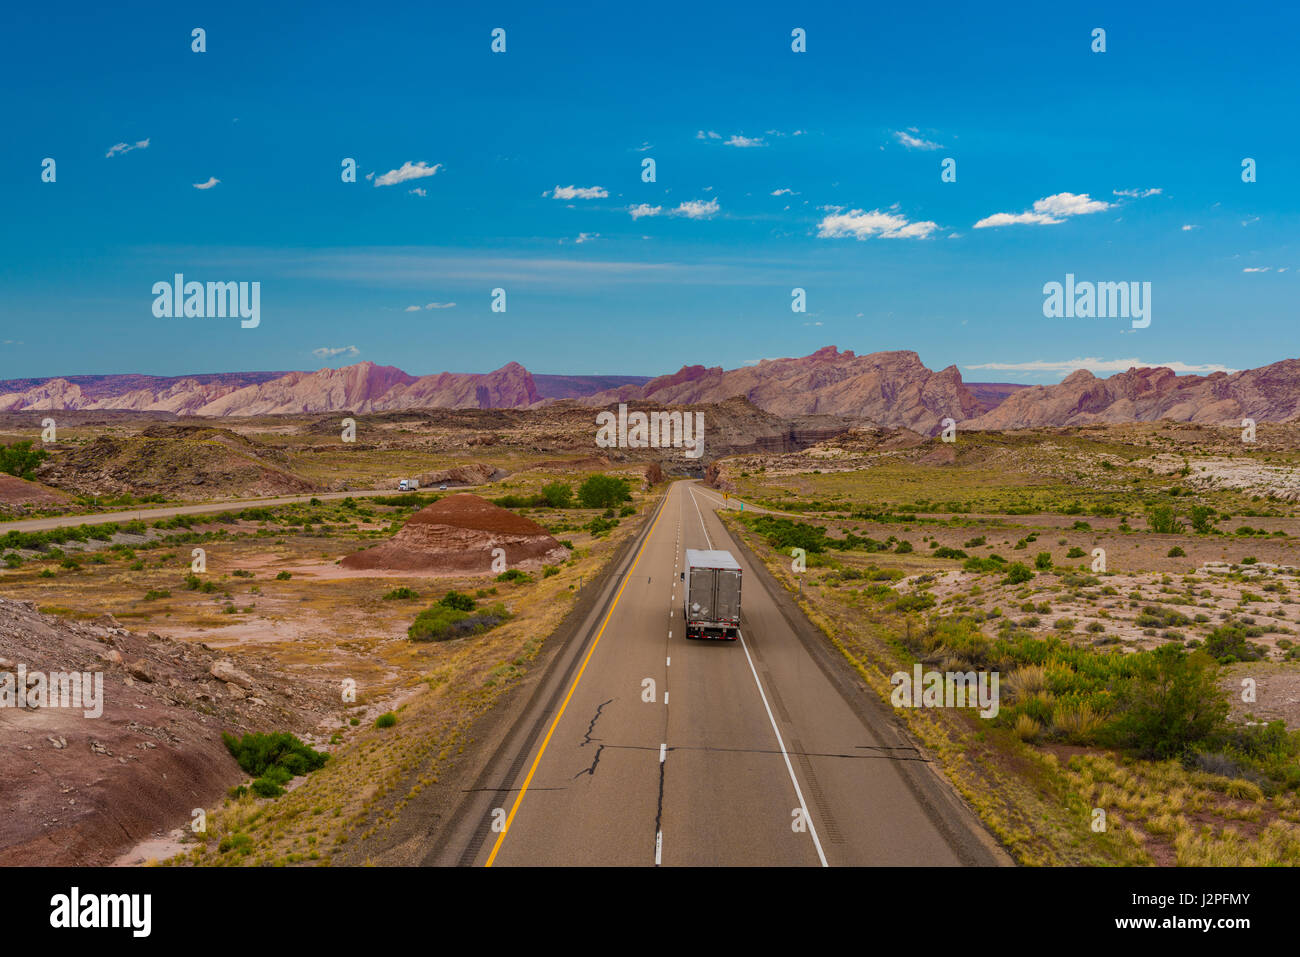 Desert highway in Utah with semi-truck Stock Photo